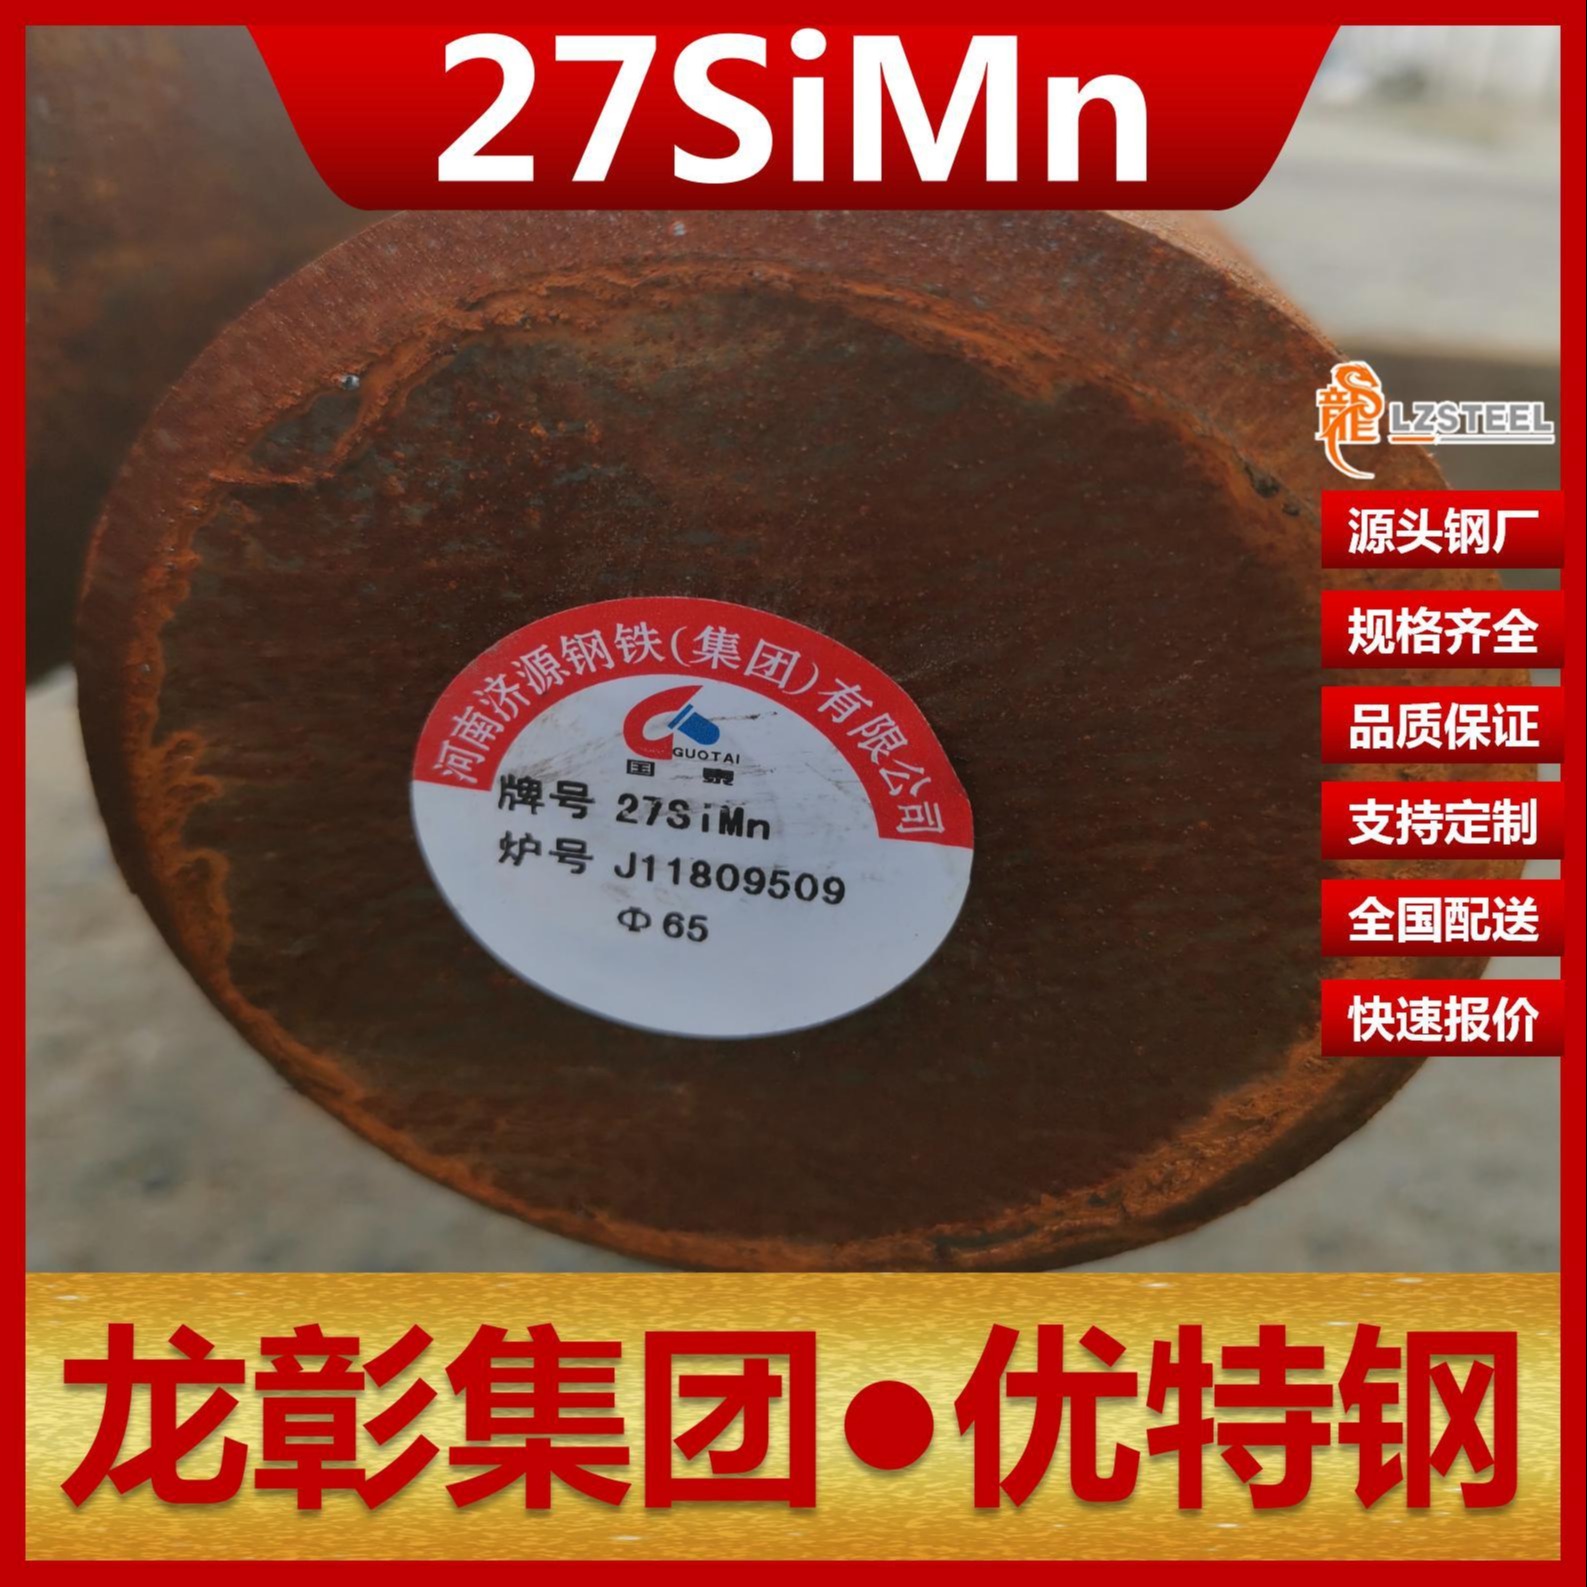 27SiMn圆钢现货批零 龙彰集团主营27SiMn圆钢棒支持定制合金钢锻件图片